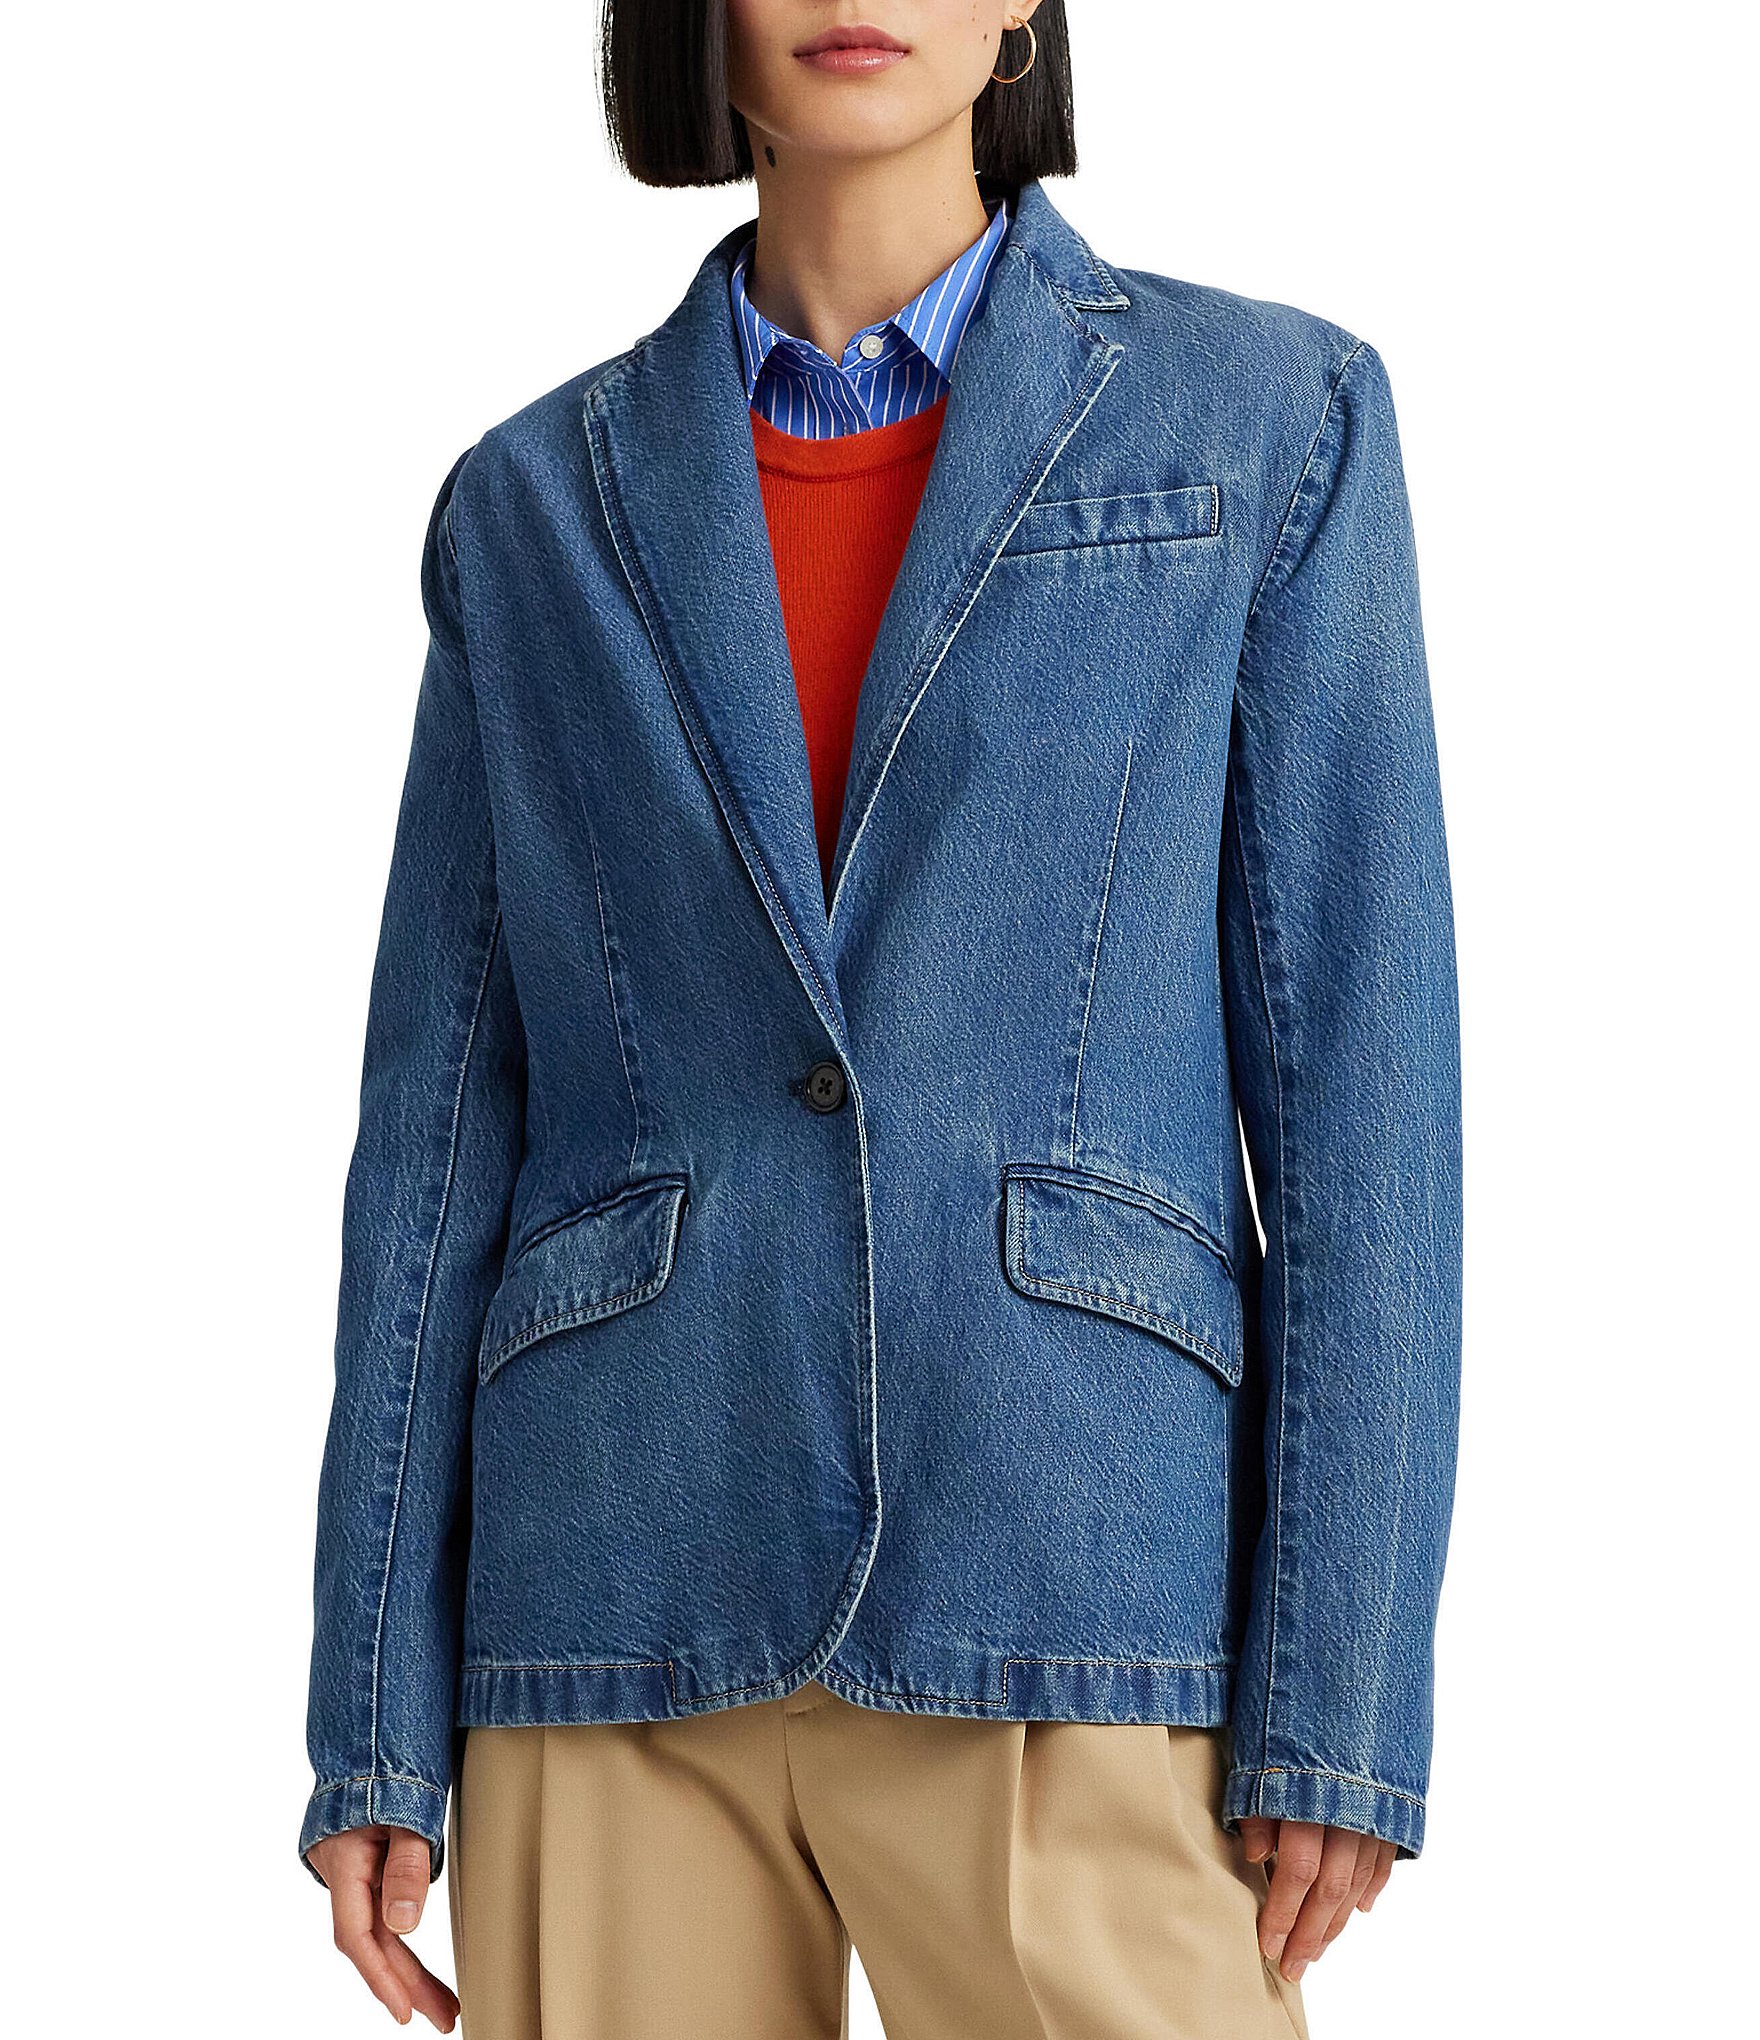 womens ralph lauren: Women's Jackets & Blazers